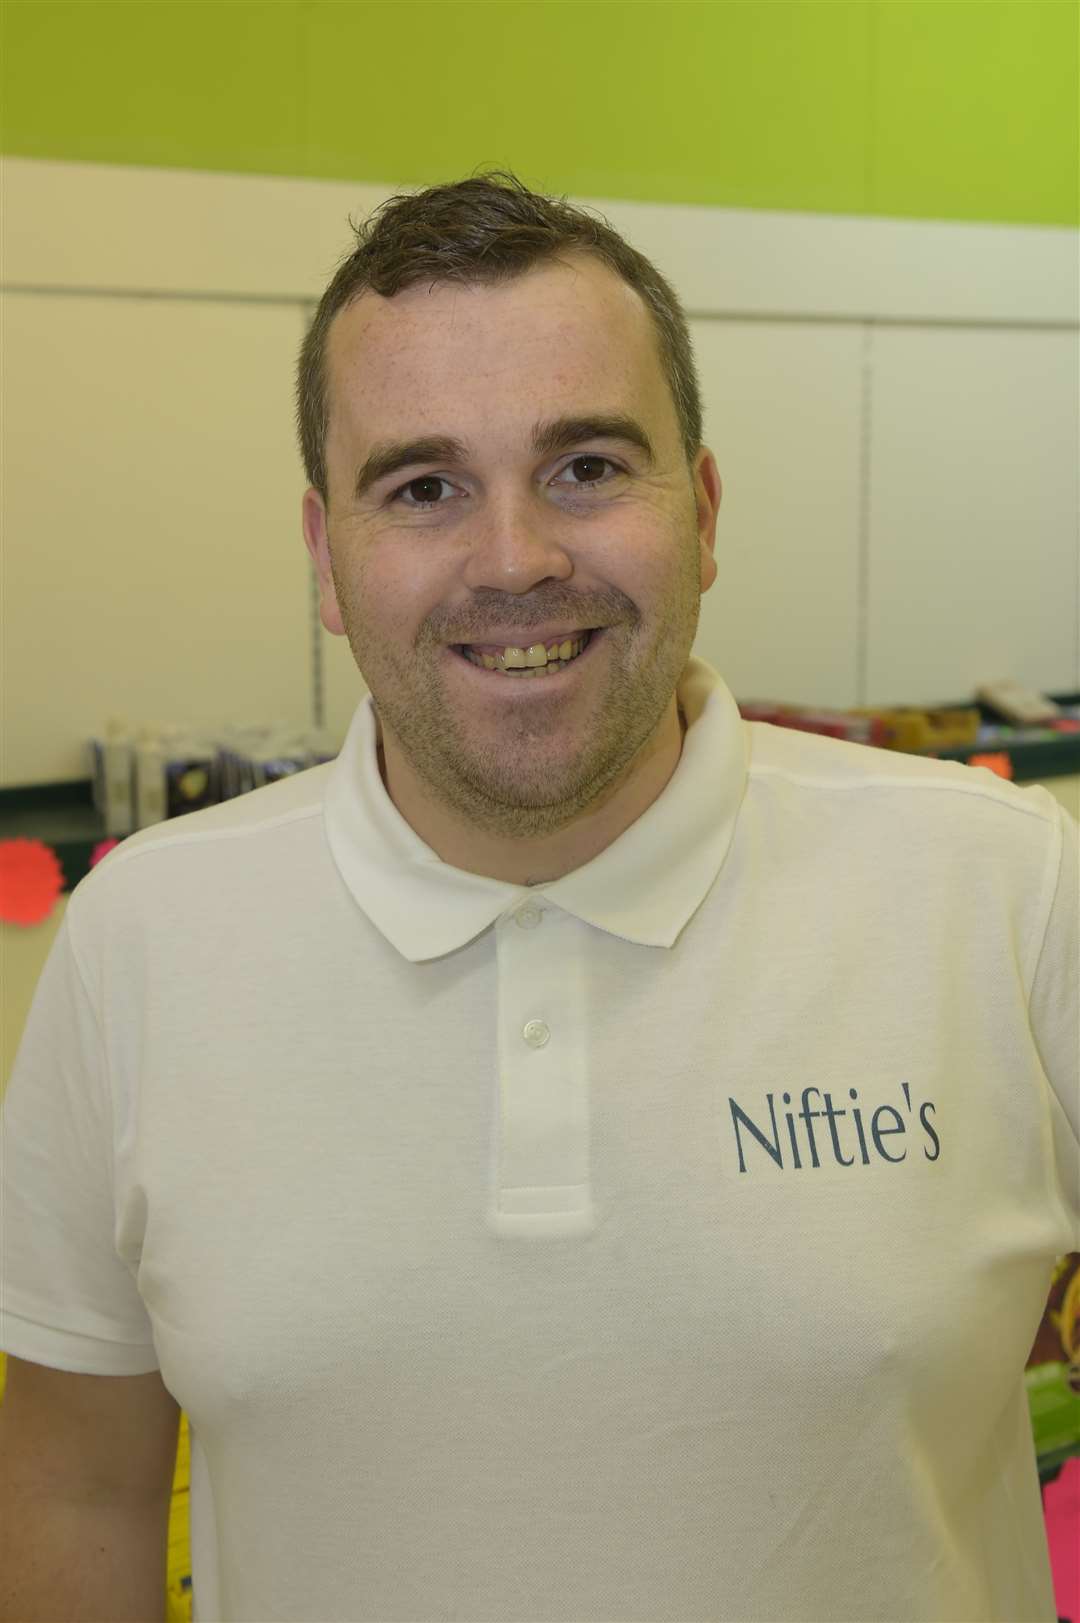 Nathaniel Richards set-up Niftie's